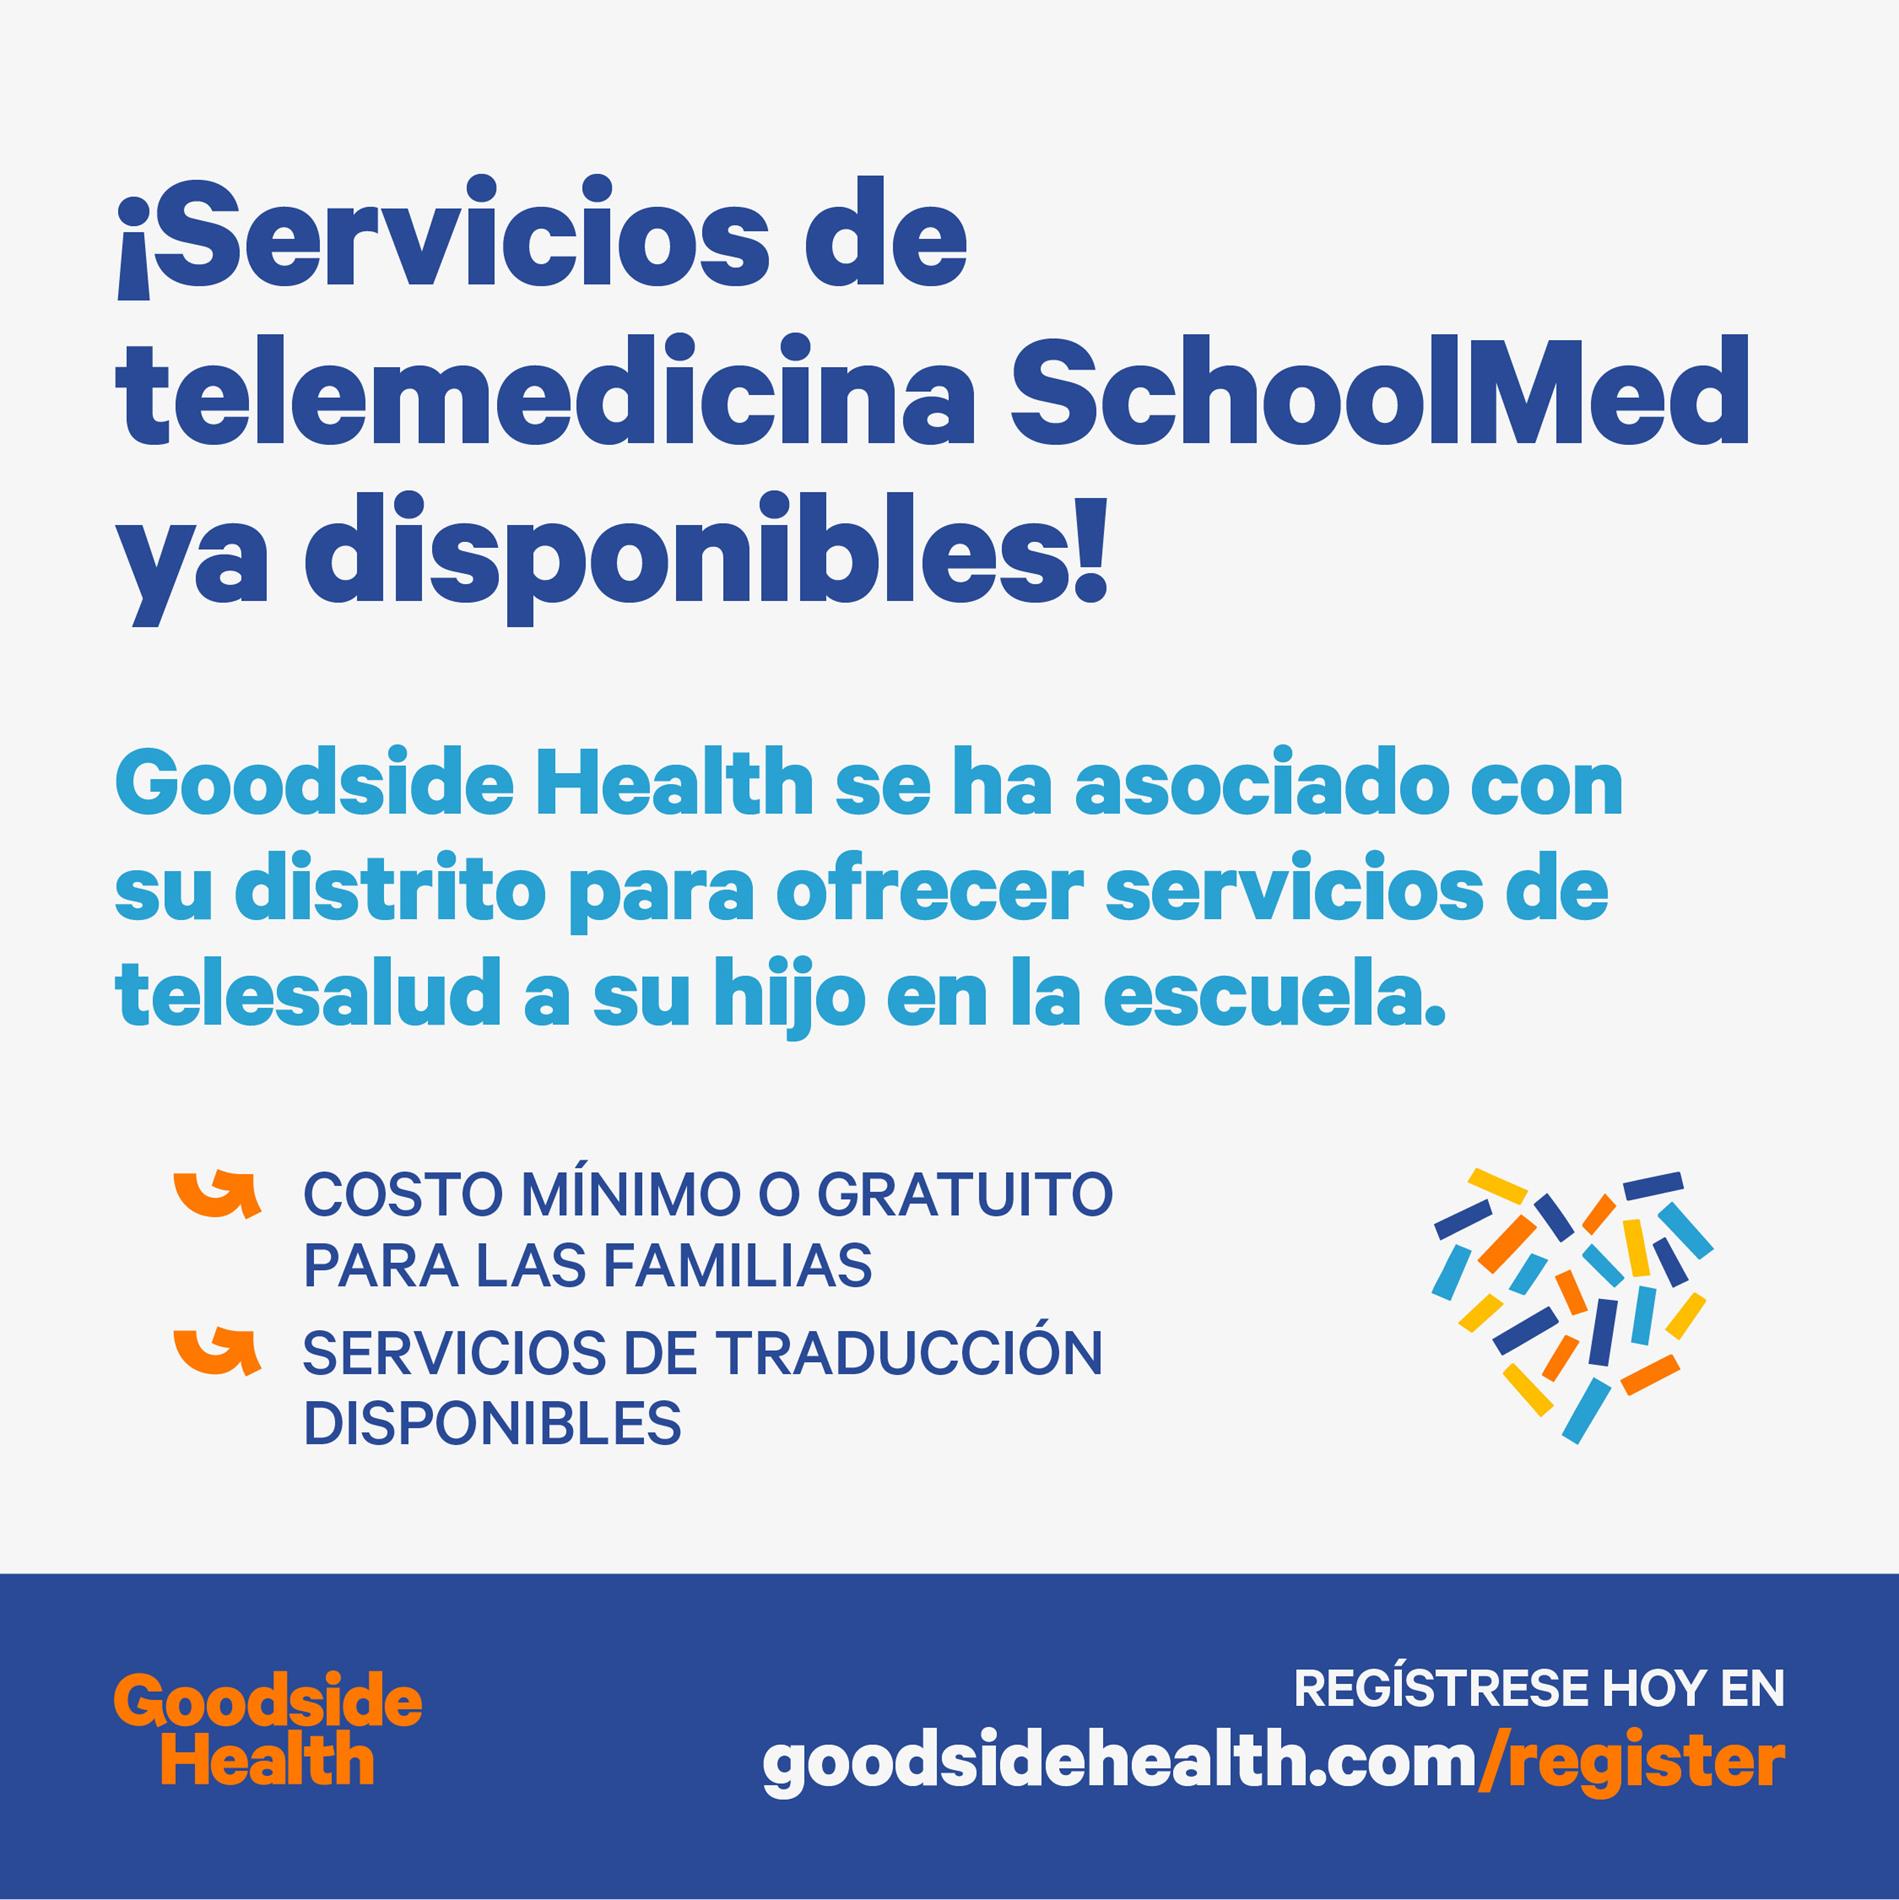 Goodside Health Information in Spanish